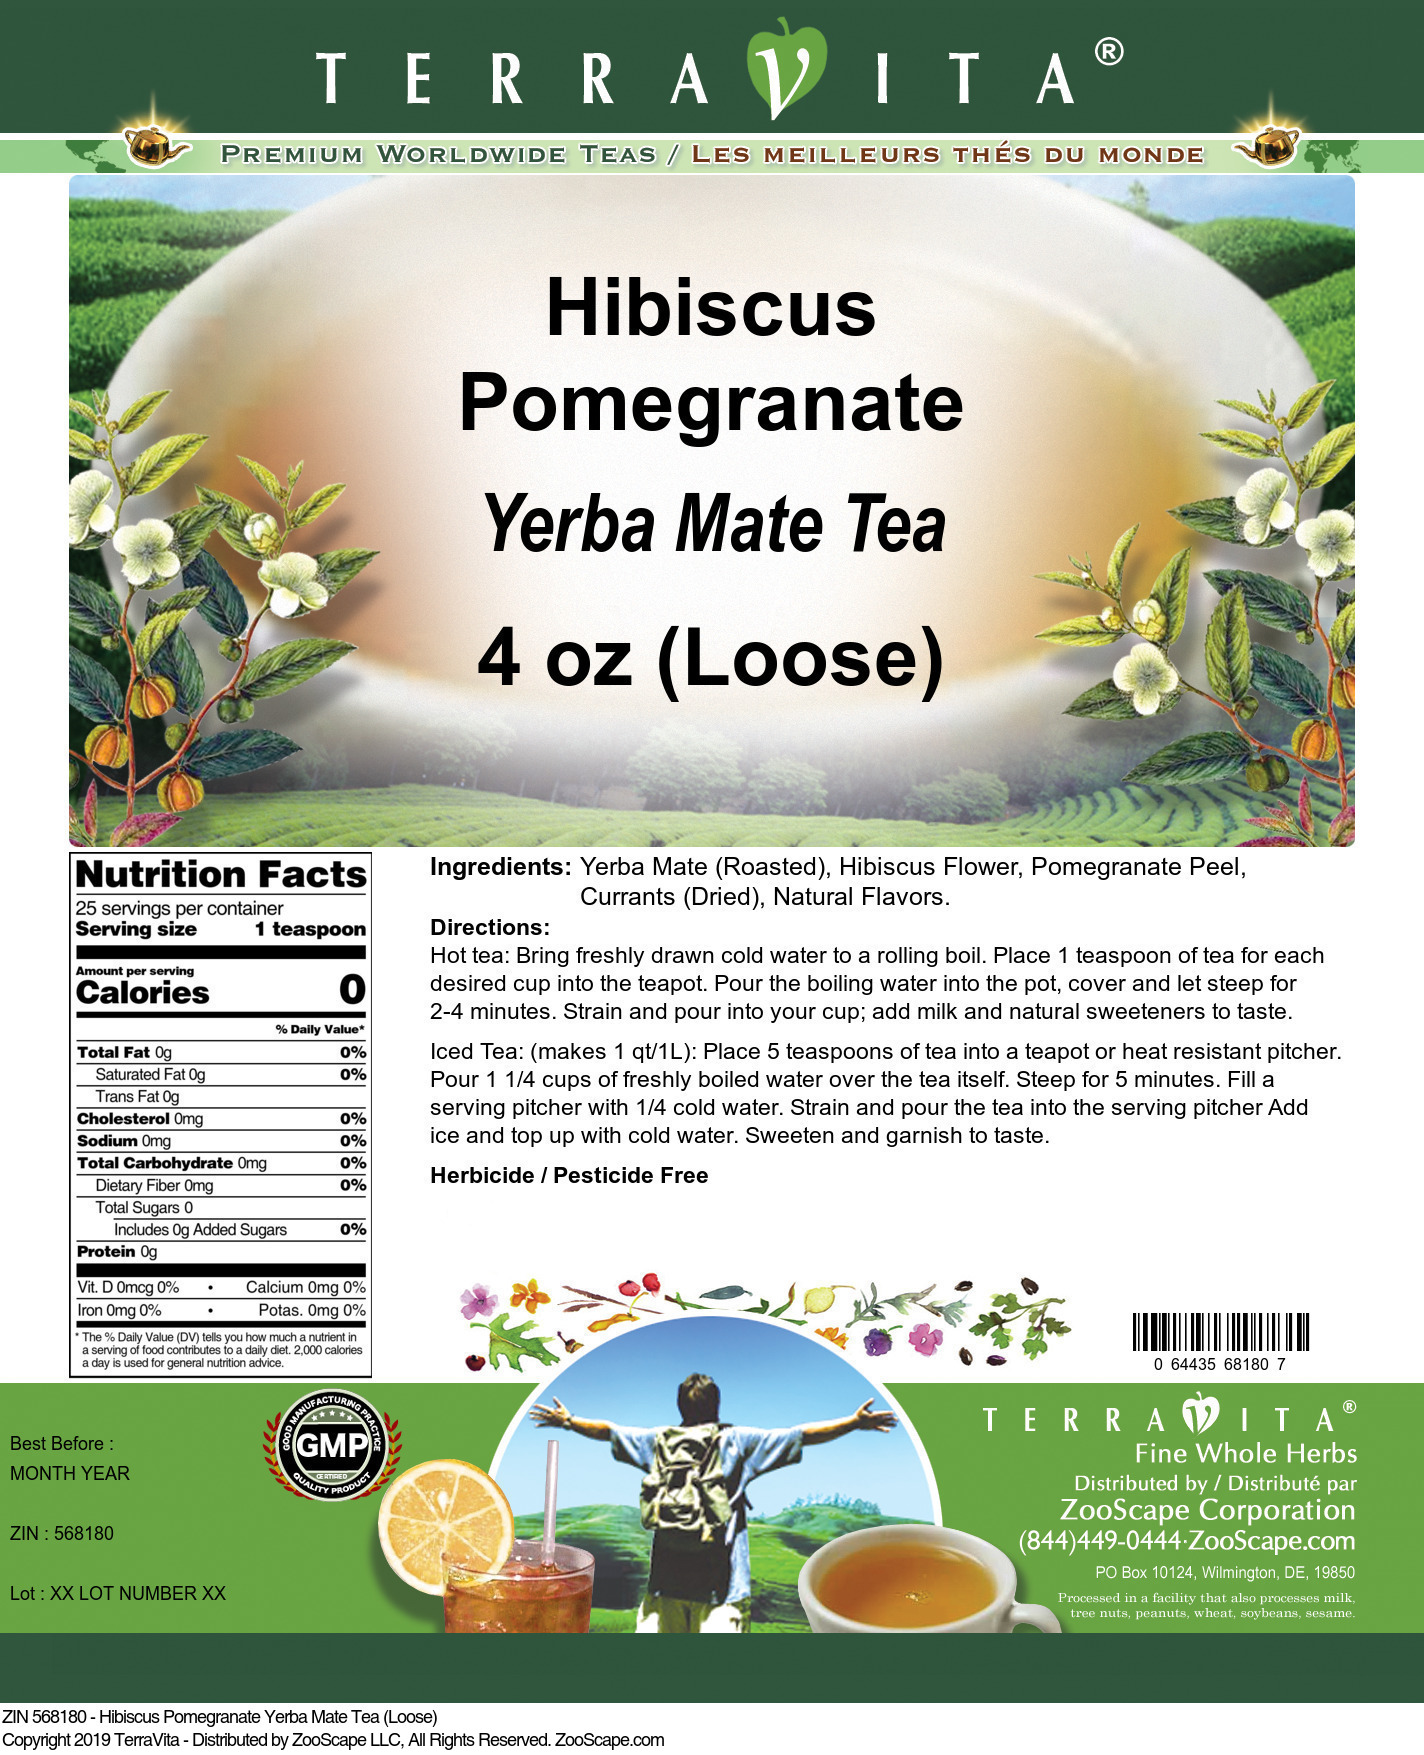 Hibiscus Pomegranate Yerba Mate Tea (Loose) - Label